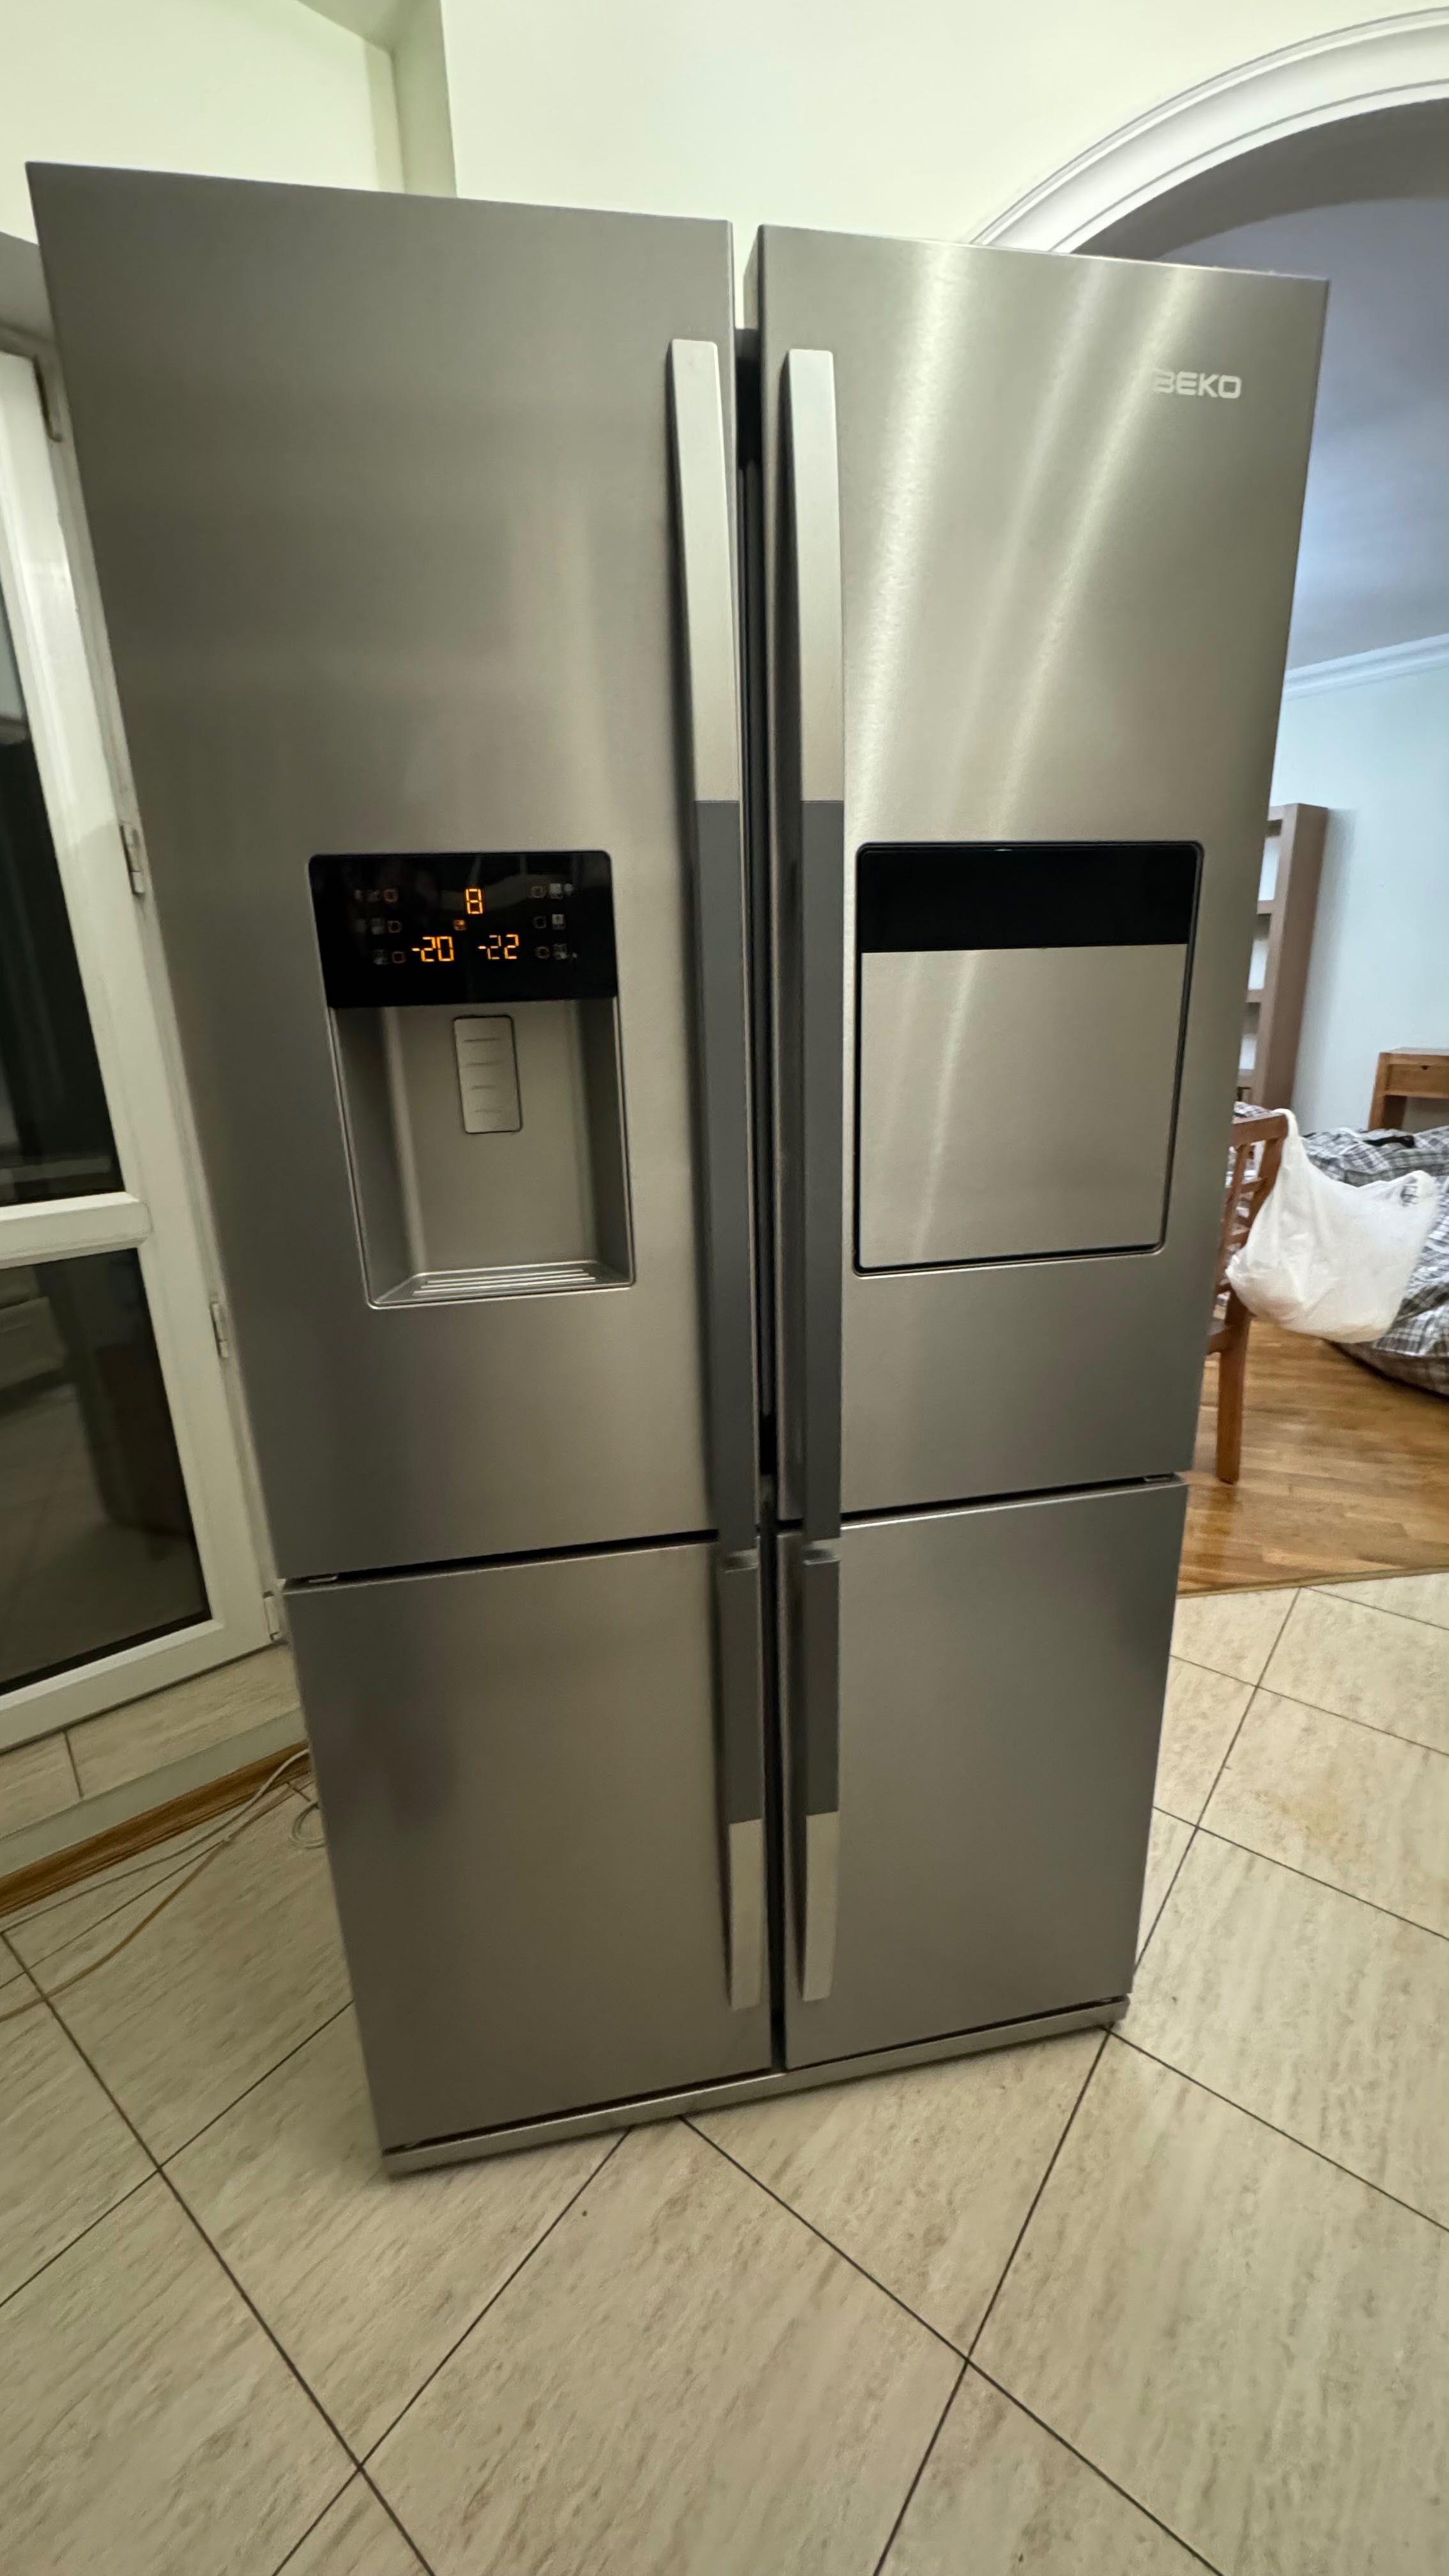 Холодильник Beko GNE 134621 X